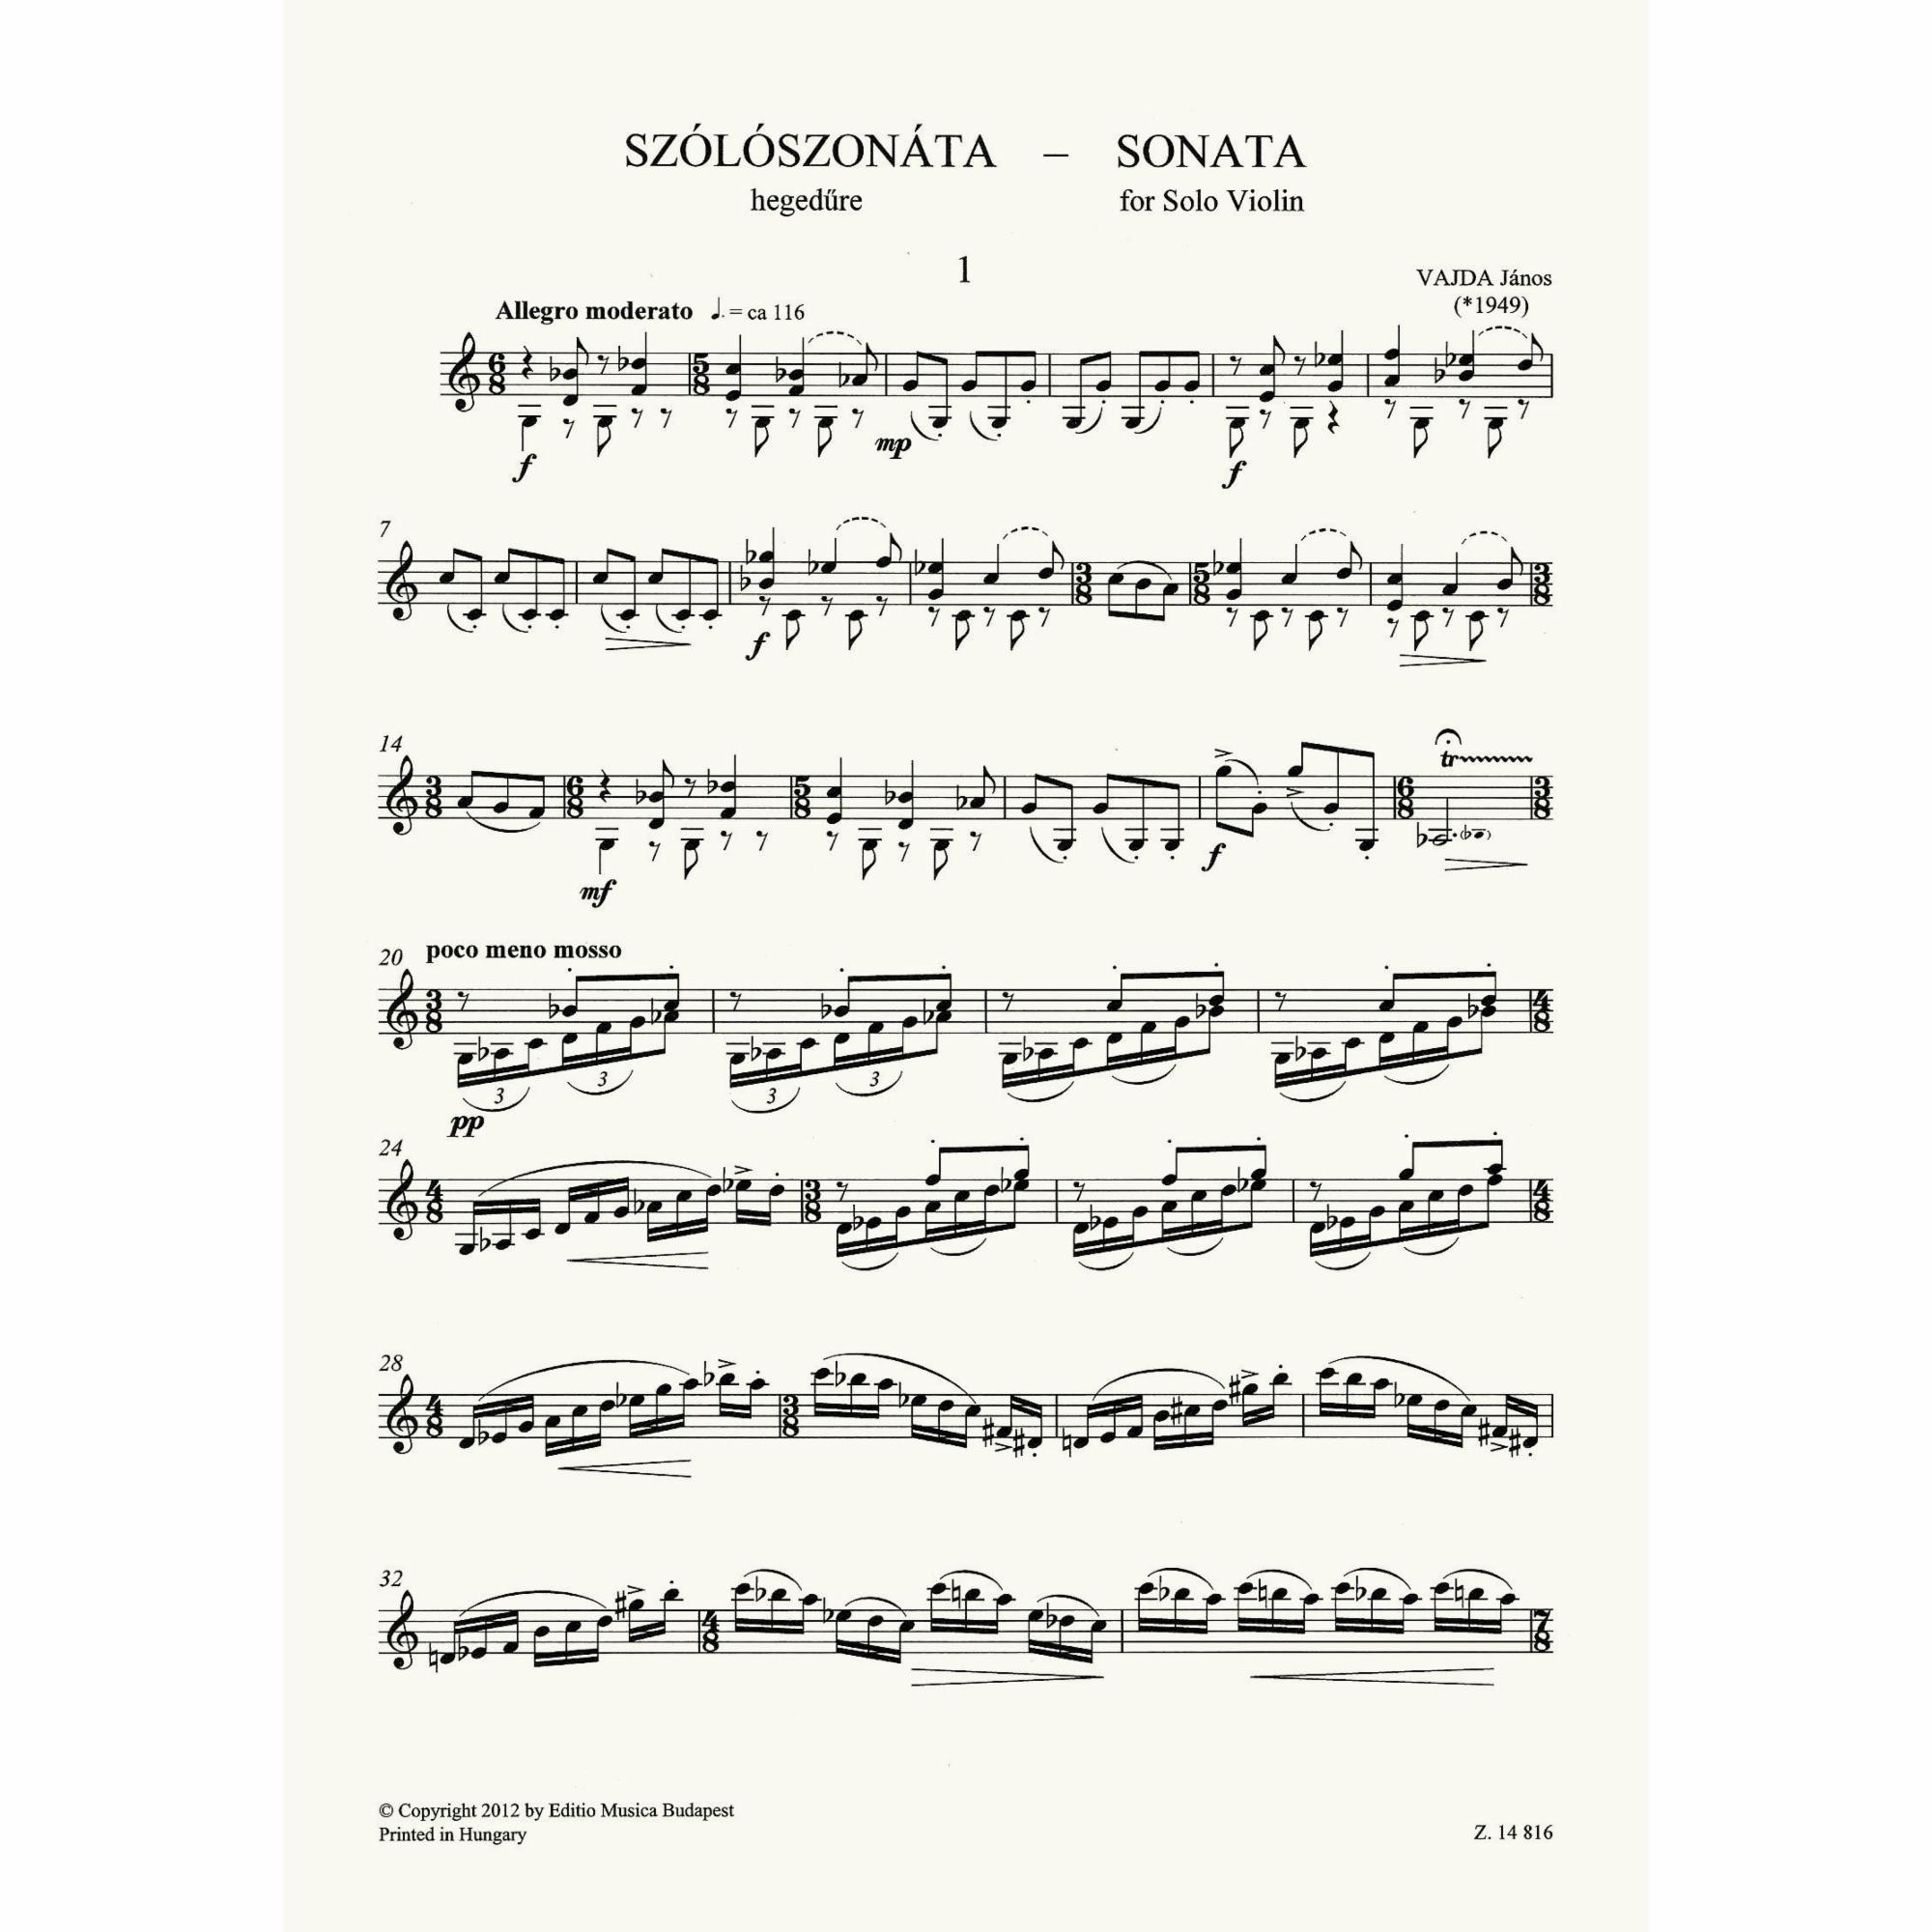 Sample: Violin Version